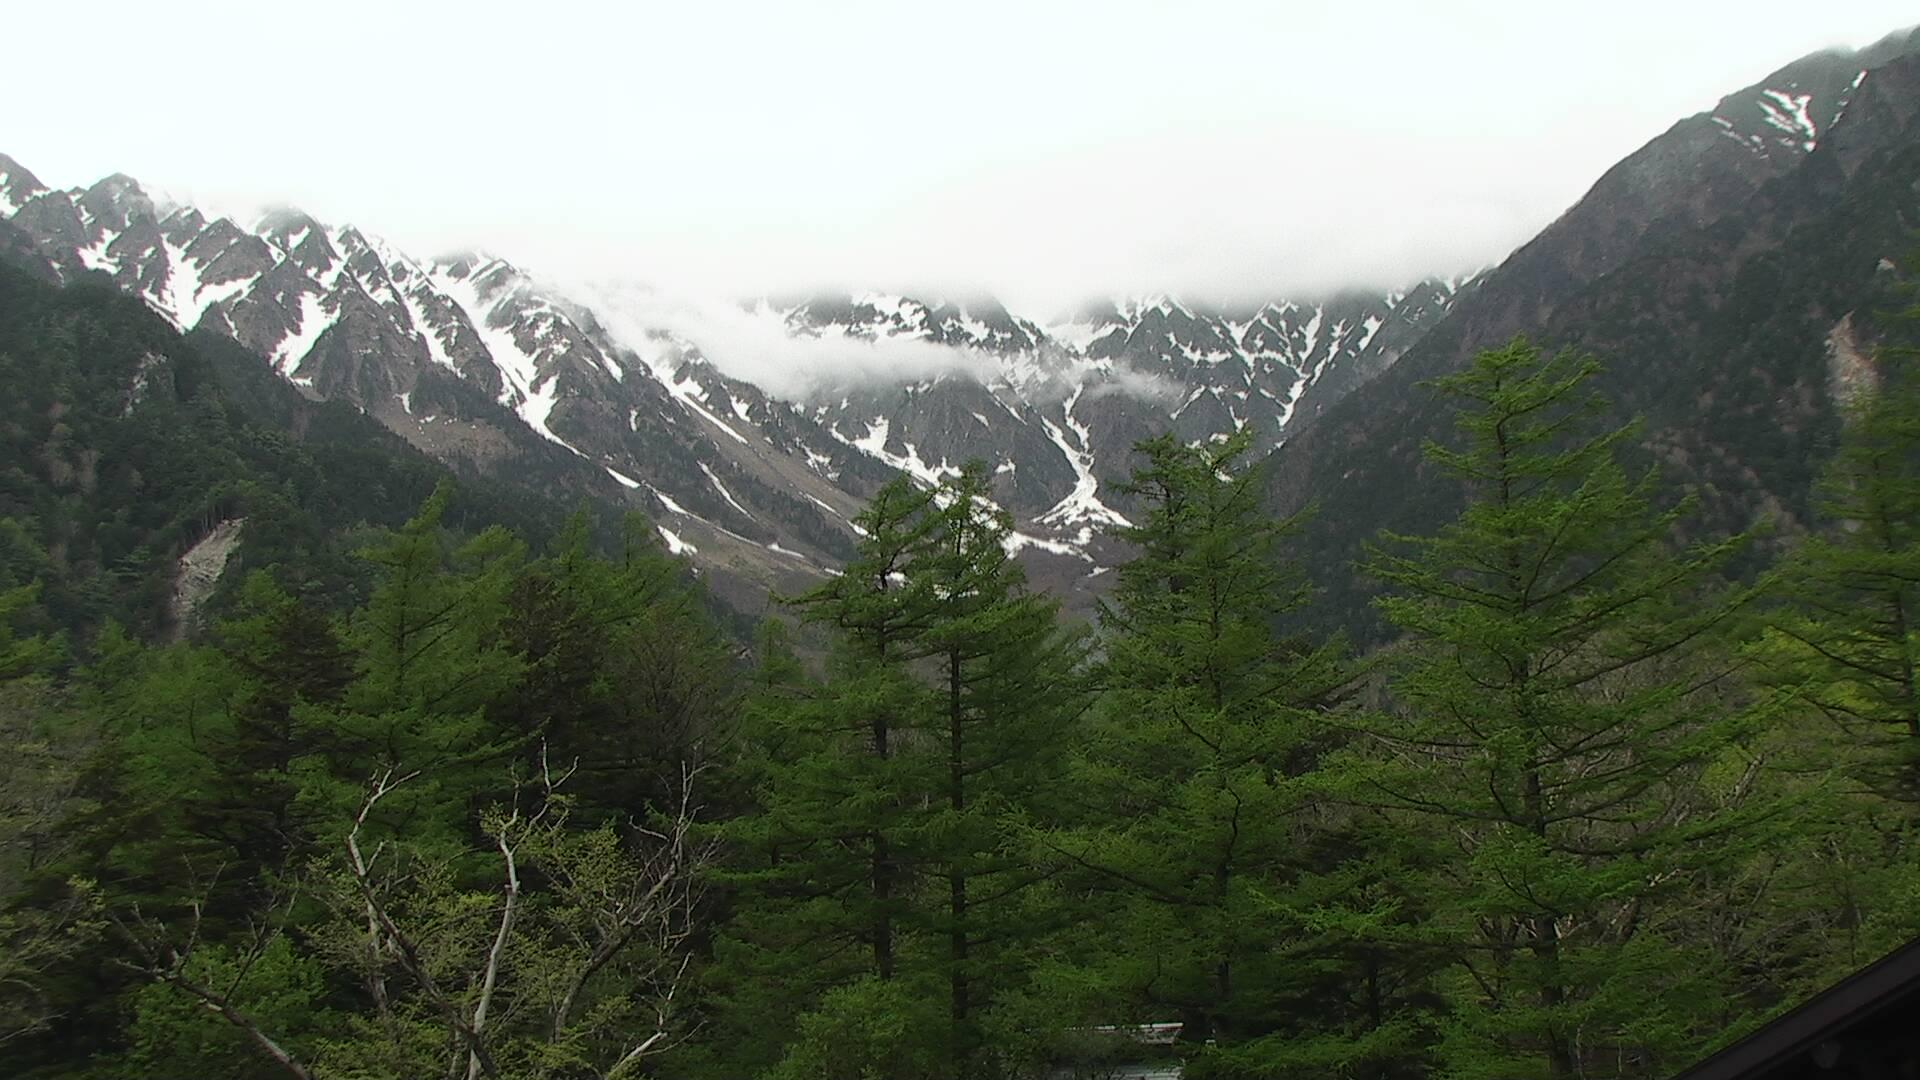 Mt. Hotaka Range as viewed from Kamikochi